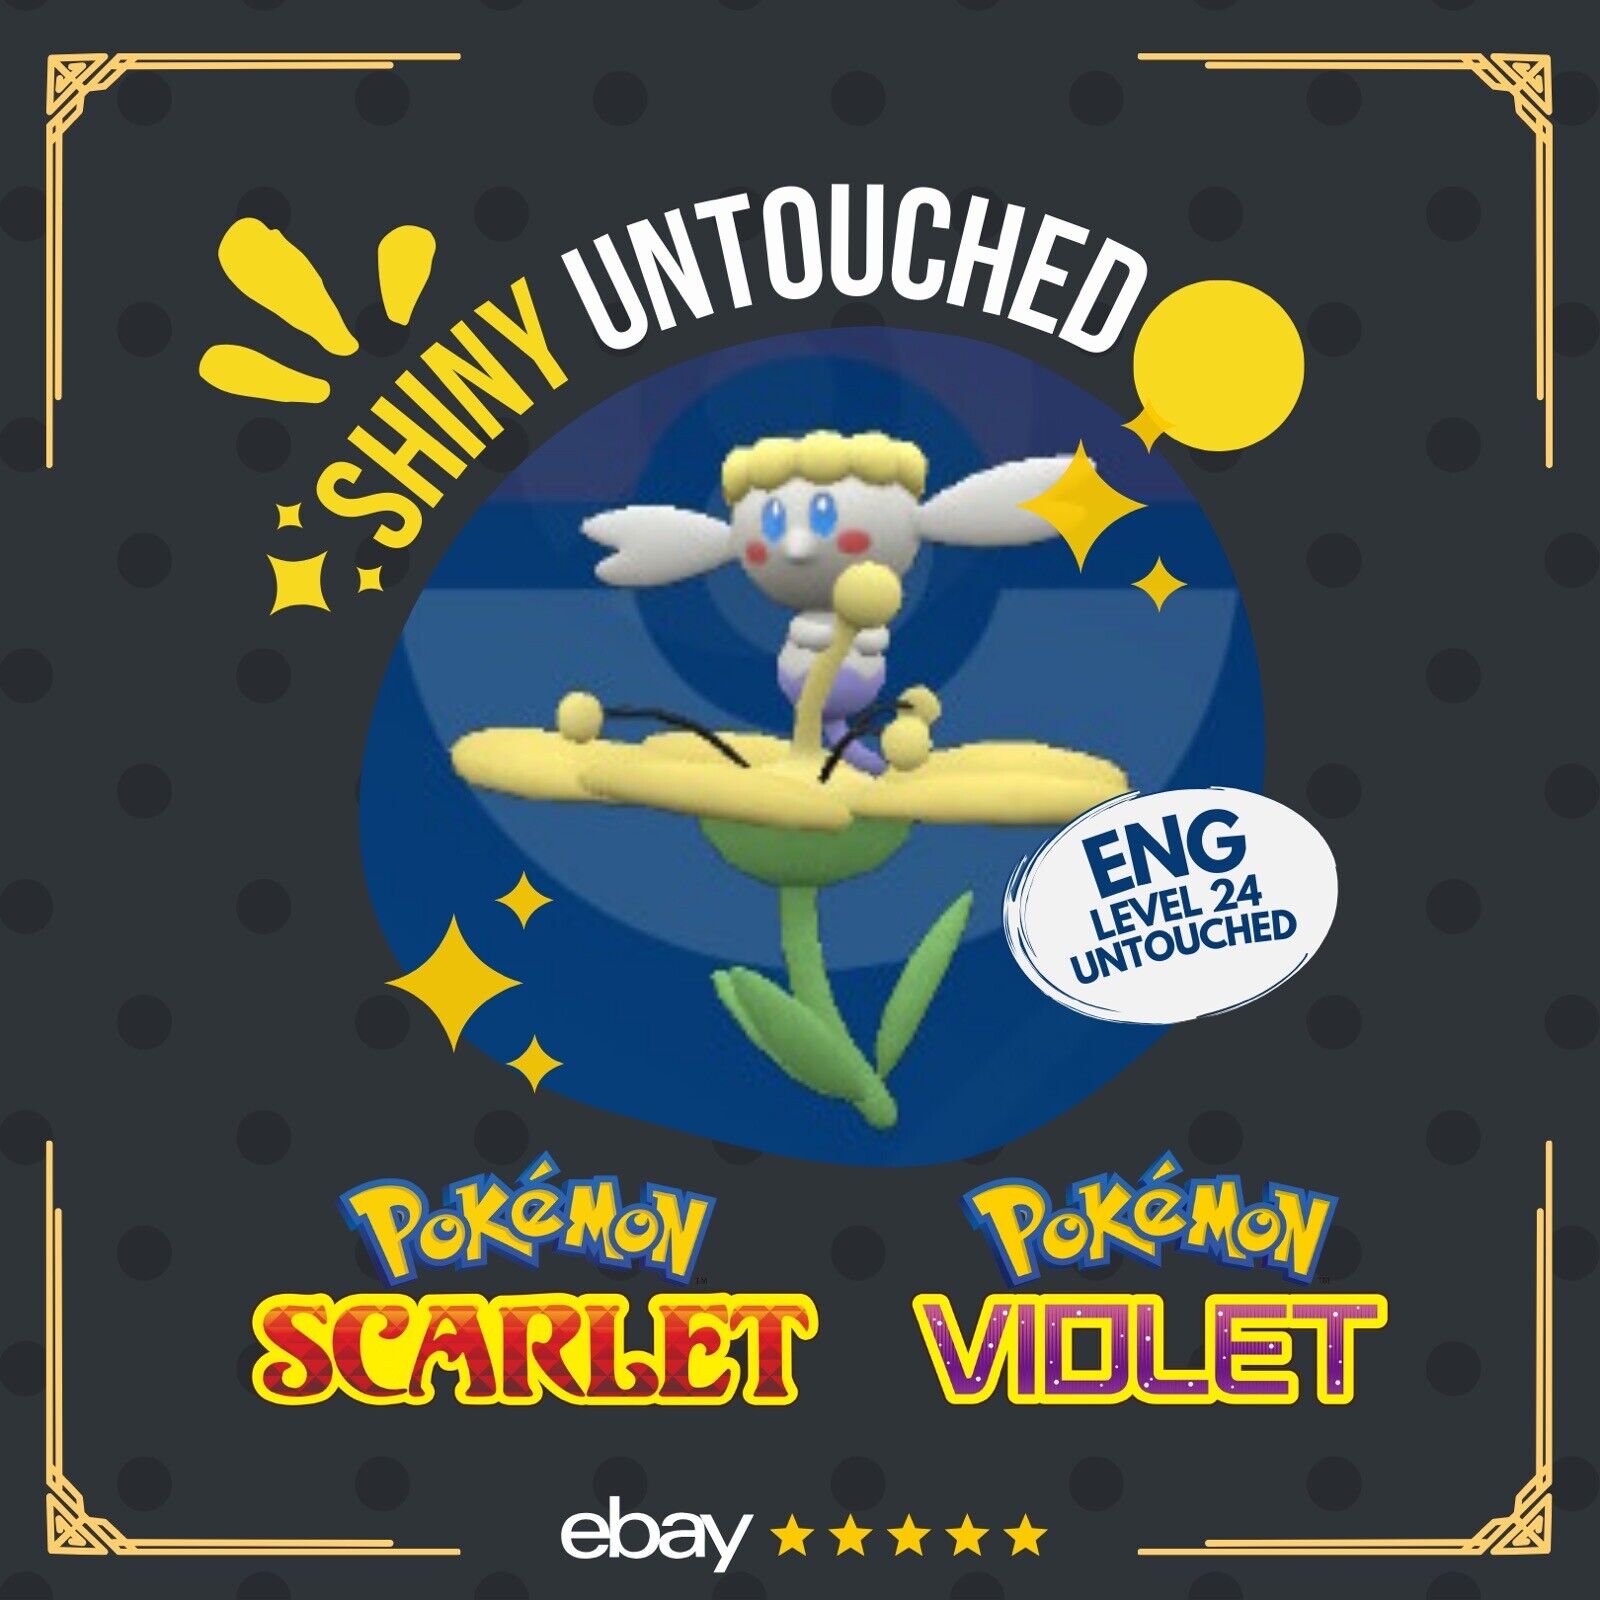 Flabebe Yellow 🟡 Shiny Event Mass Outbreak Untouched Pokémon Scarlet Violet ENG Shiny by Shiny Living Dex | Shiny Living Dex